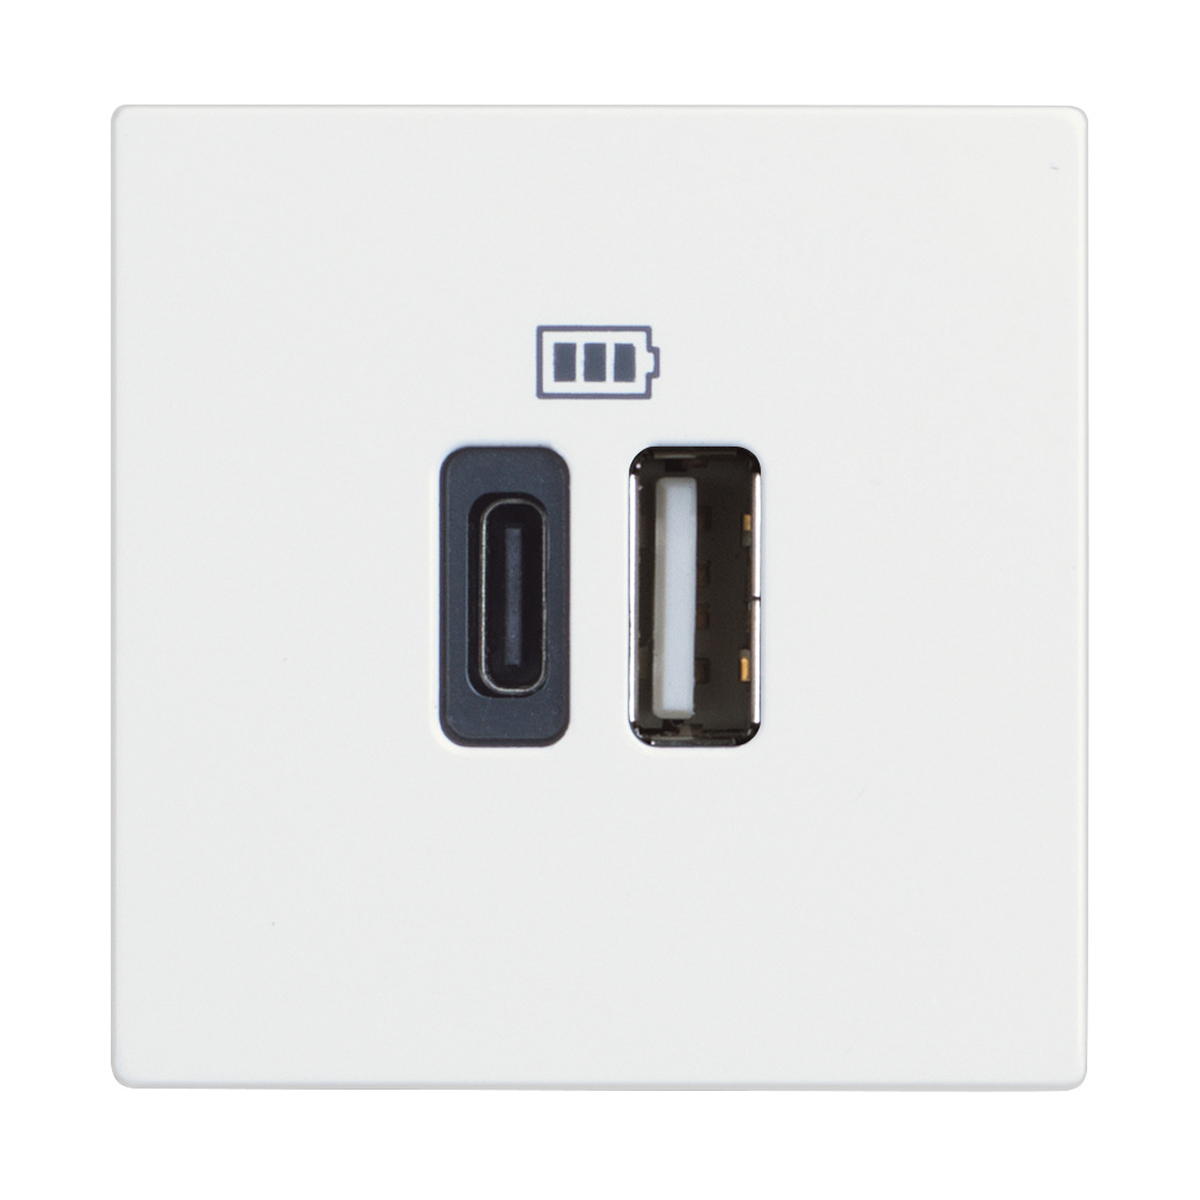 Base cargador doble USB Classia - Tipo A+C - Blanco - 2 módulos